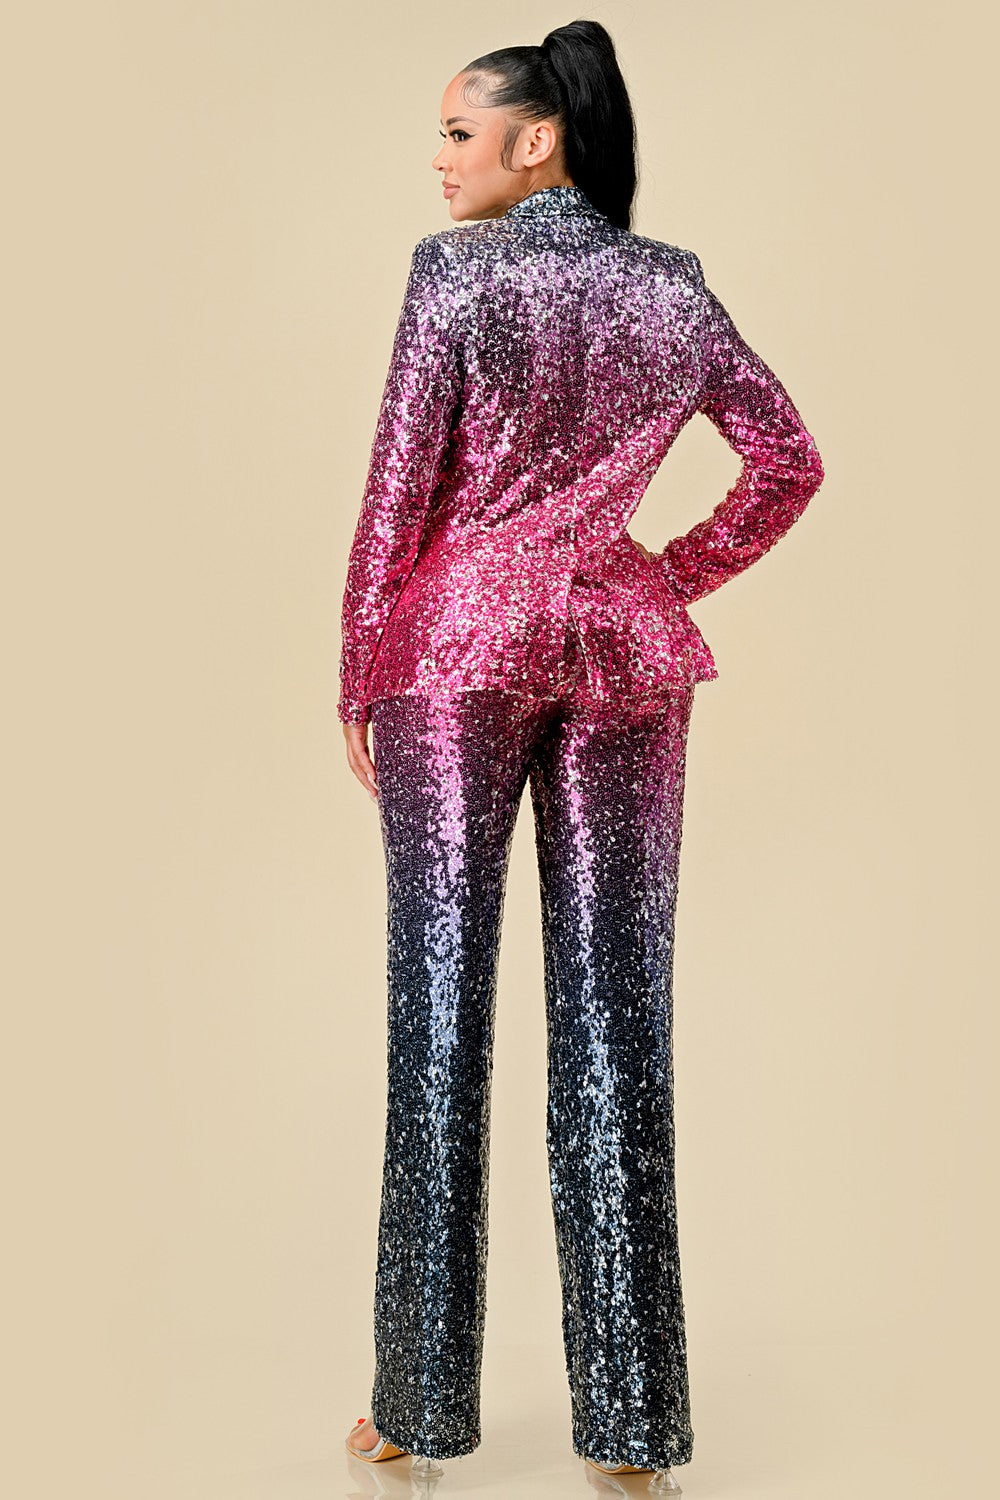 Glitz & Glam Pant Suit by – Bink & Bougie